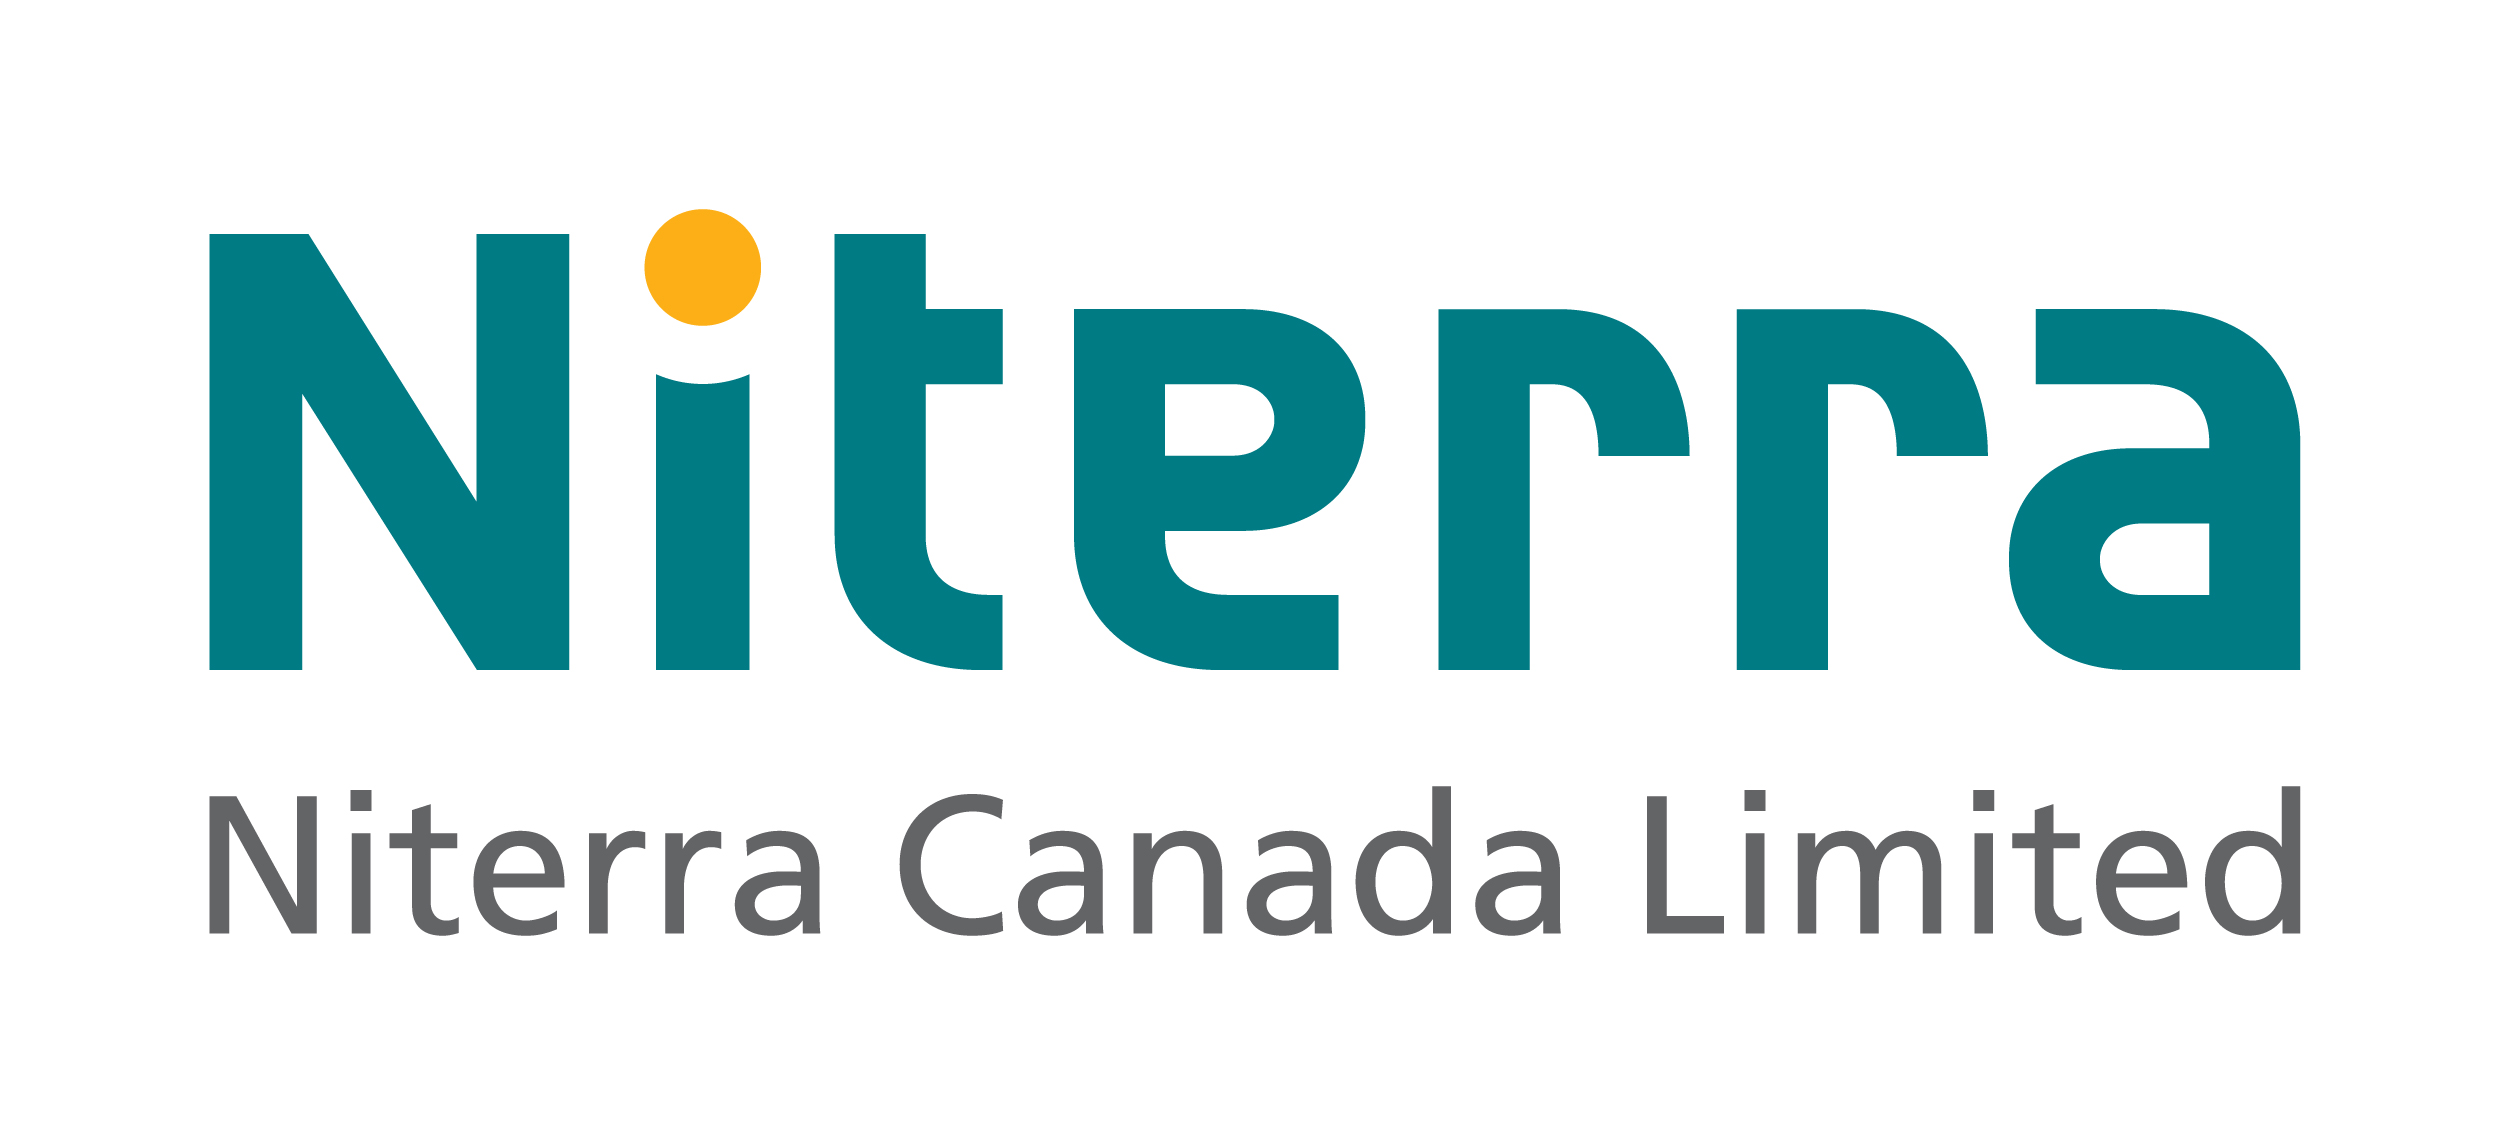 Niterra Canada Limited (NGK Spark Plugs)